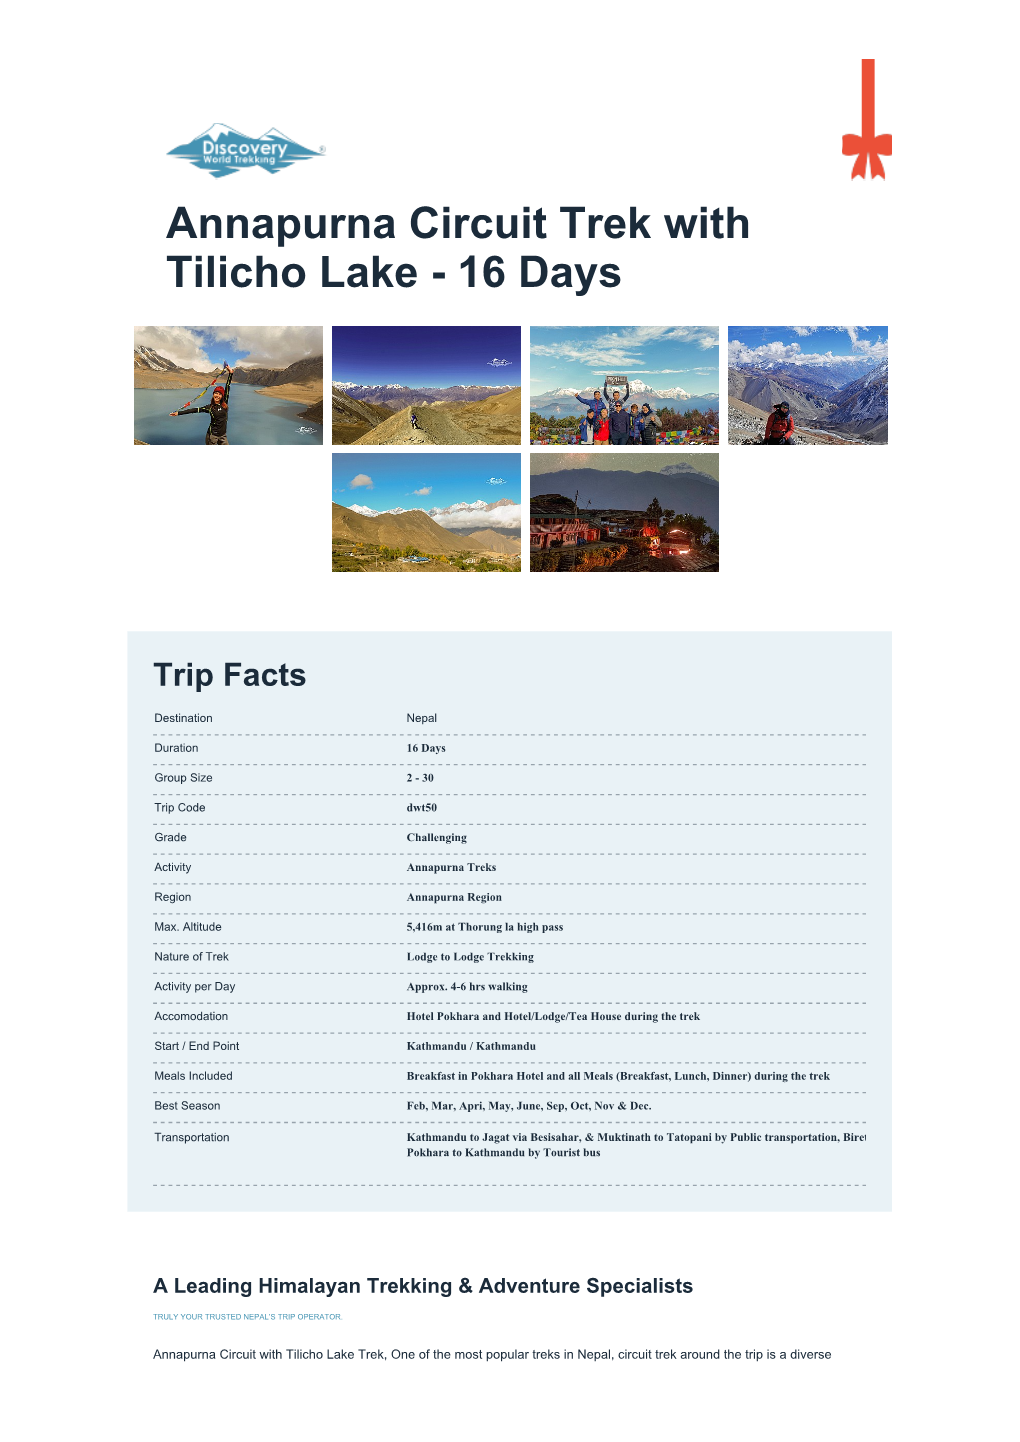 Annapurna Circuit Trek with Tilicho Lake - 16 Days